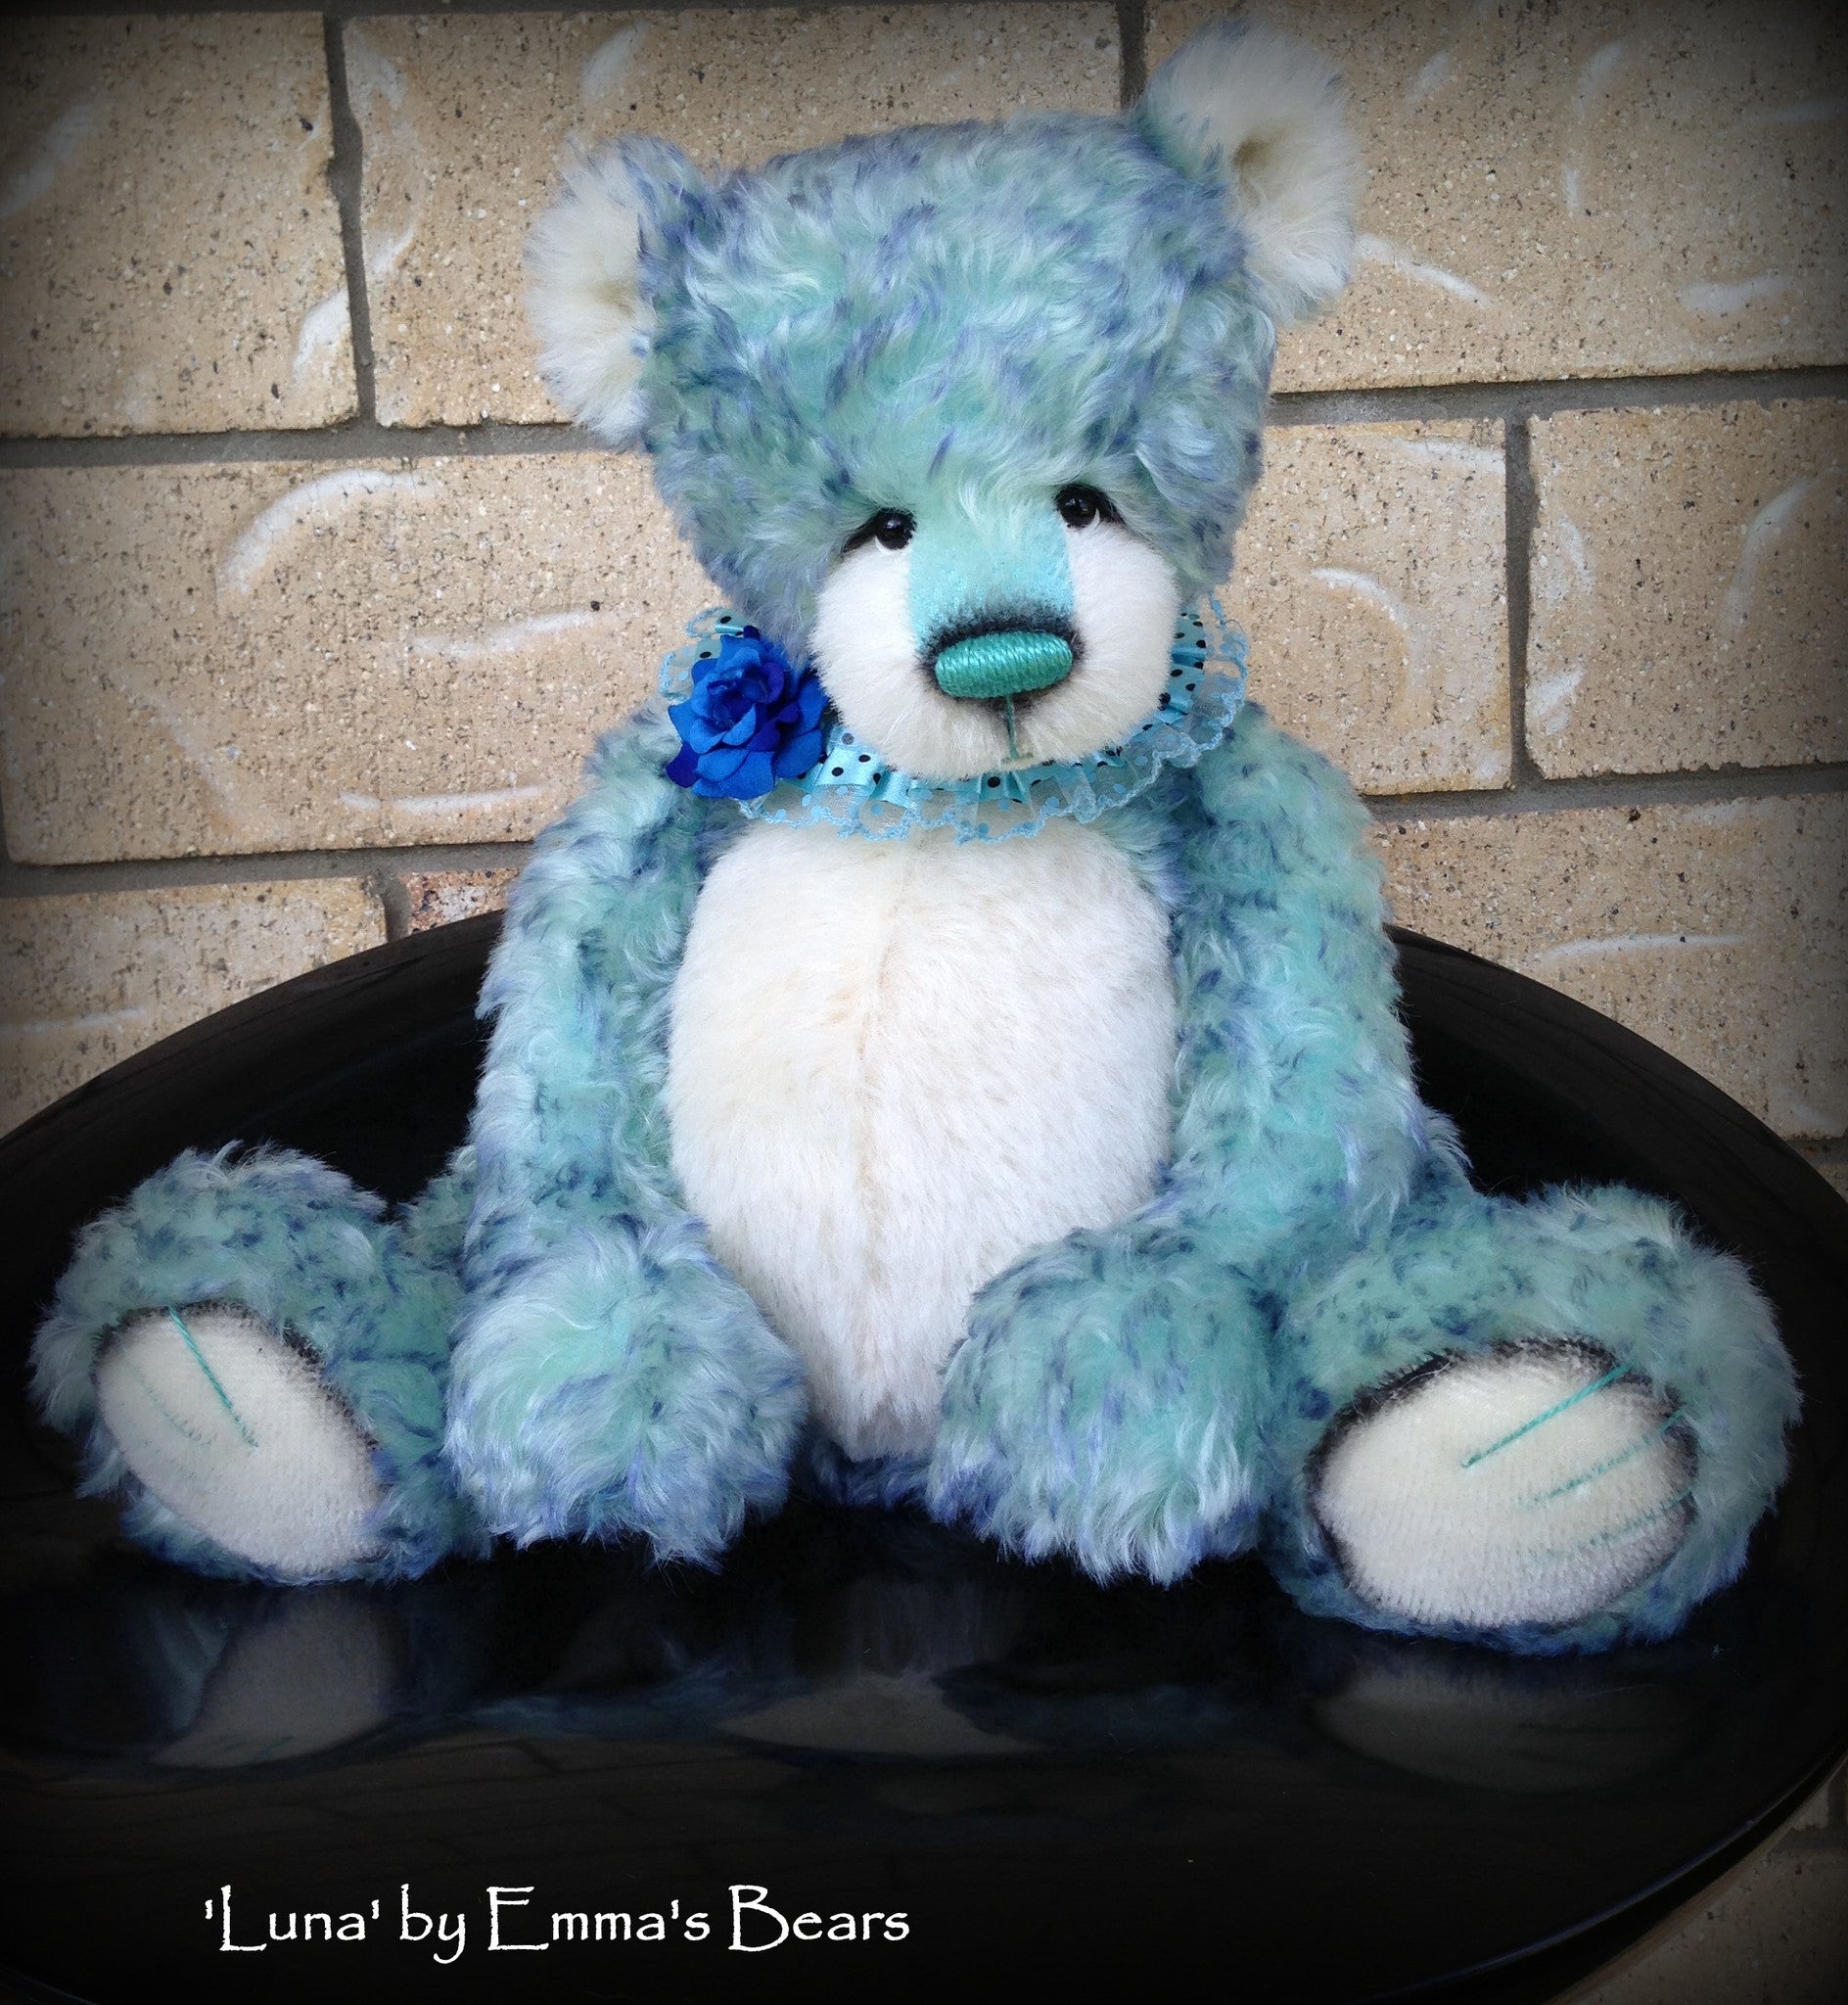 Luna - 17" aqua blue artist bear by Emma's Bears - OOAK